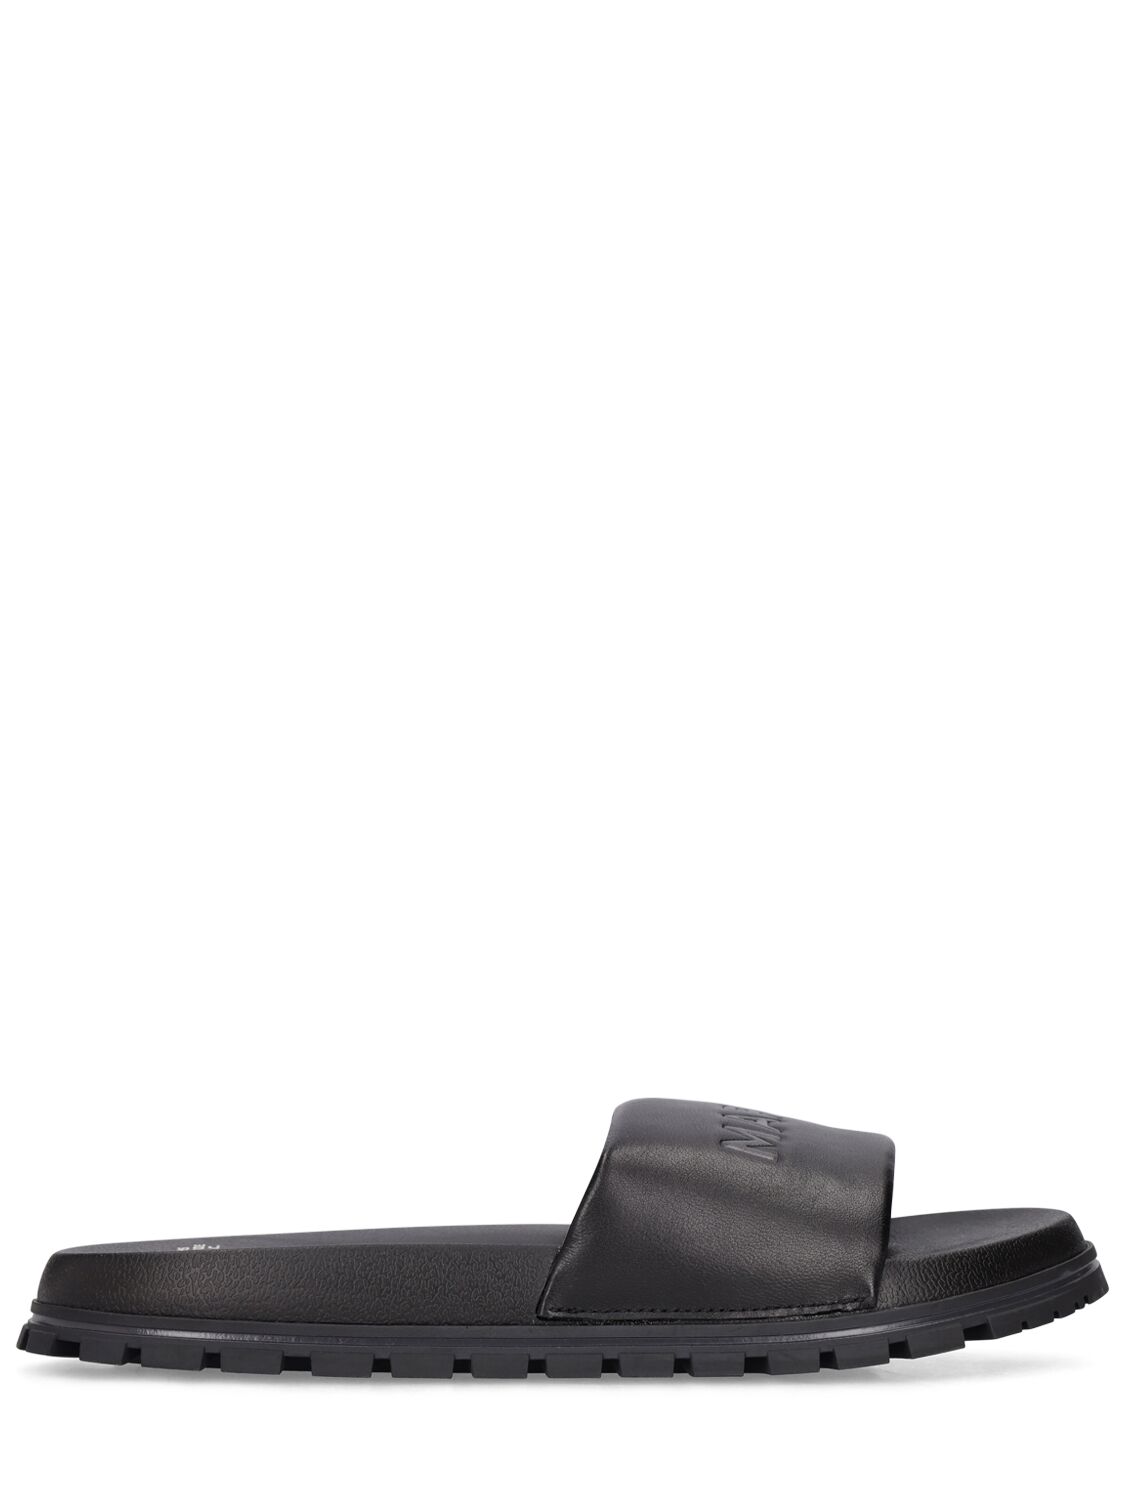 Marc Jacobs Leather Slide Sandals In Black